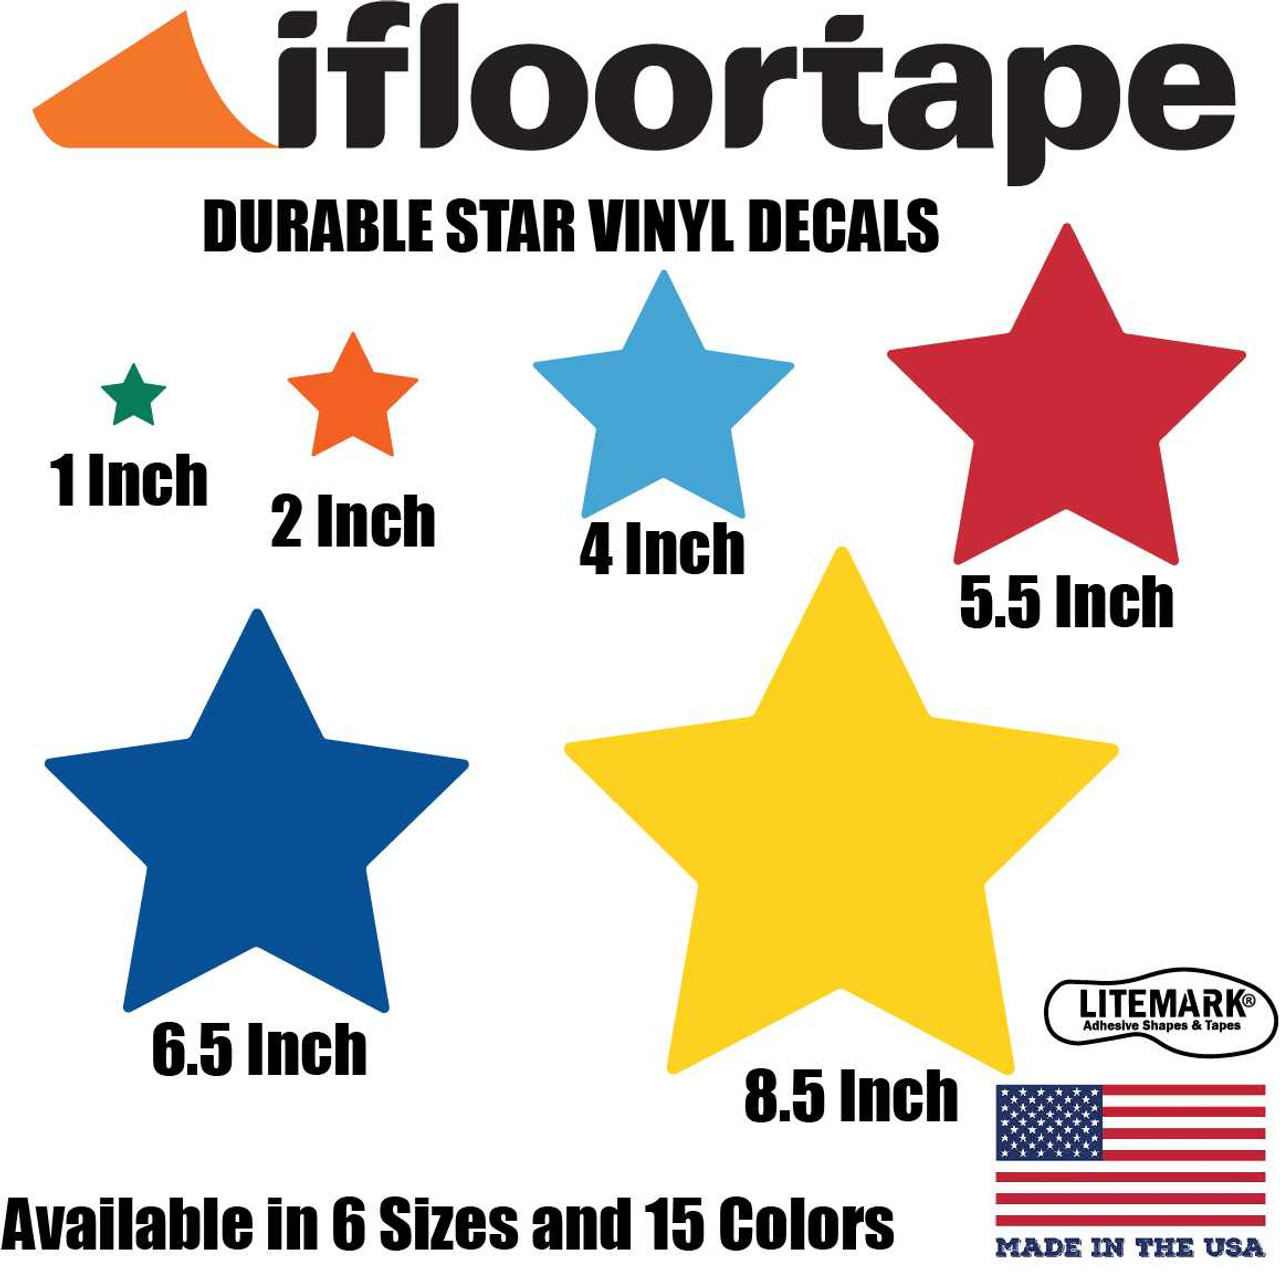 LiteMark Durable Gloss Finish Star Vinyl Decal Stickers